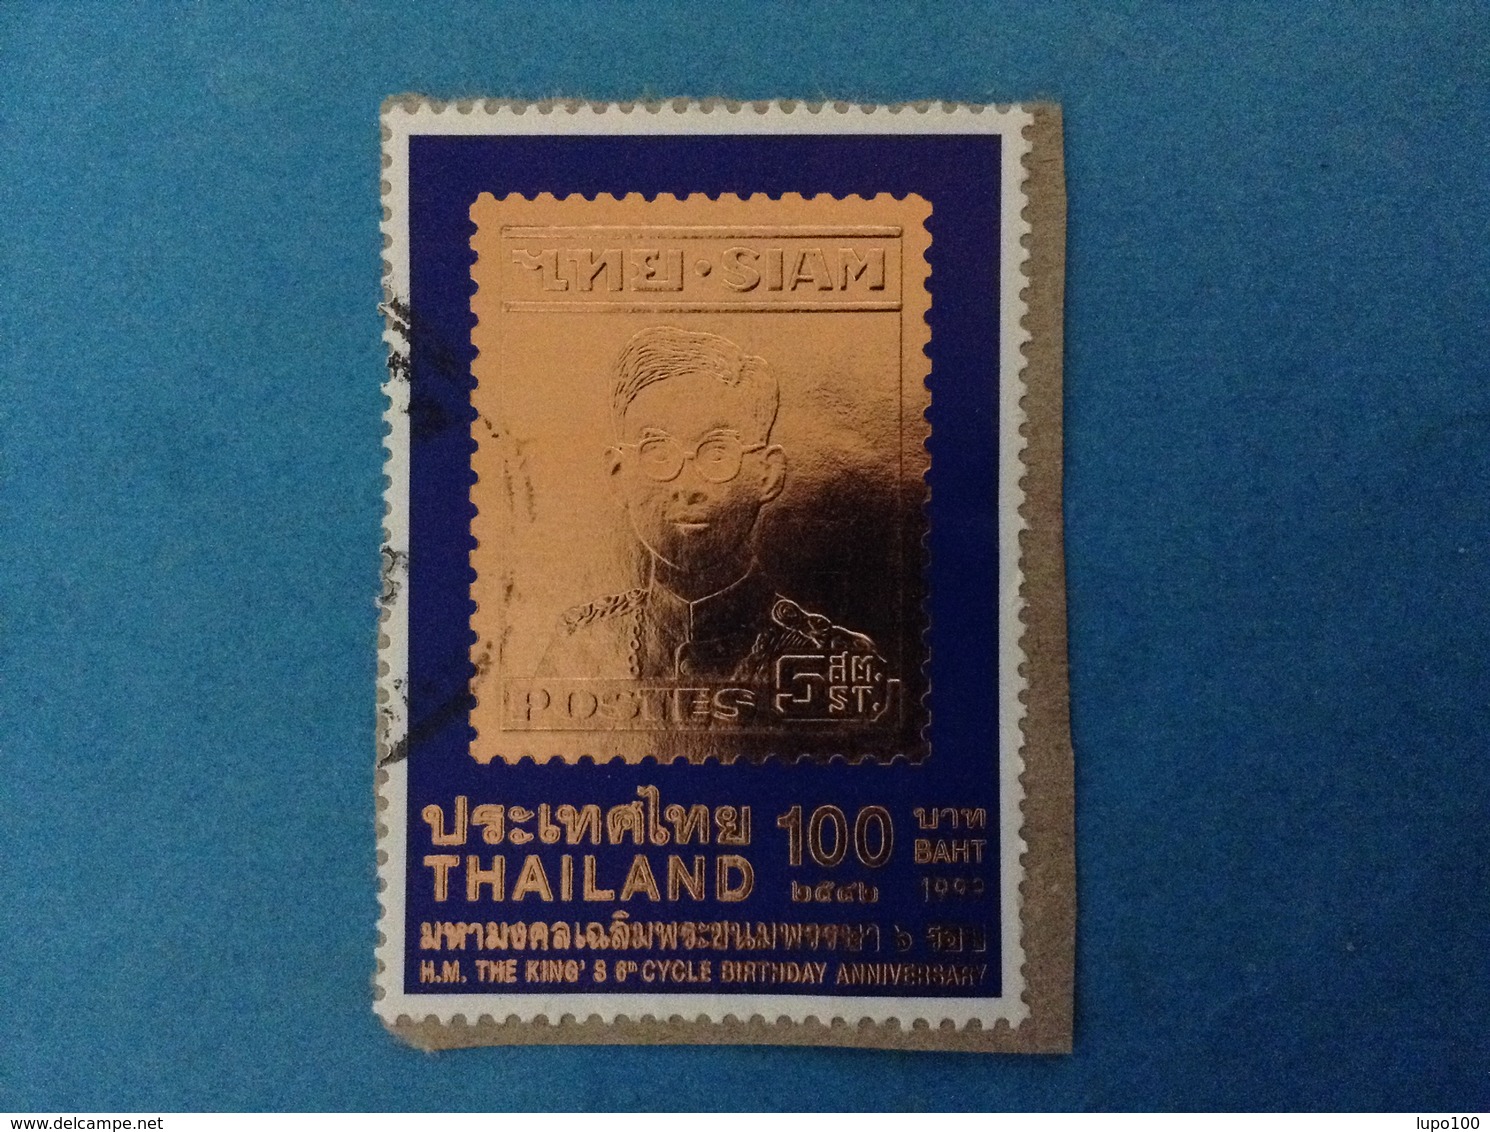 1999 TAILANDIA THAILAND FRANCOBOLLO USATO STAMP USED - ANNIVERSARIO RE 100 - Tailandia